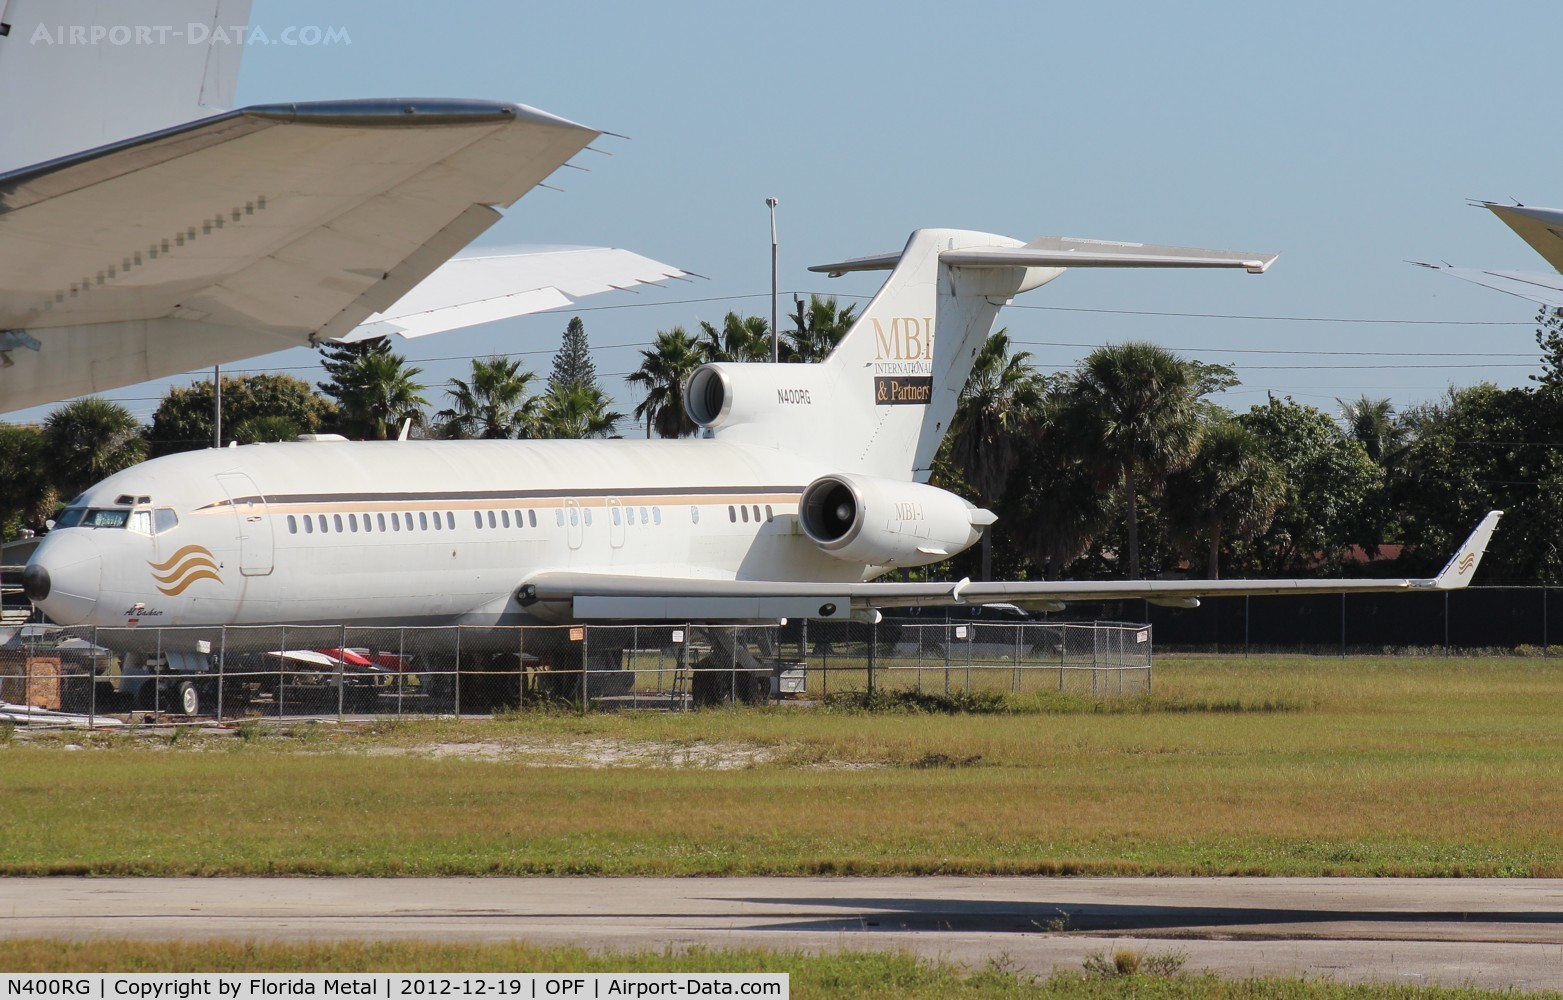 N400RG, 1967 Boeing 727-22 C/N 19149, Private 727-100 awaiting its fate at Opa Locka